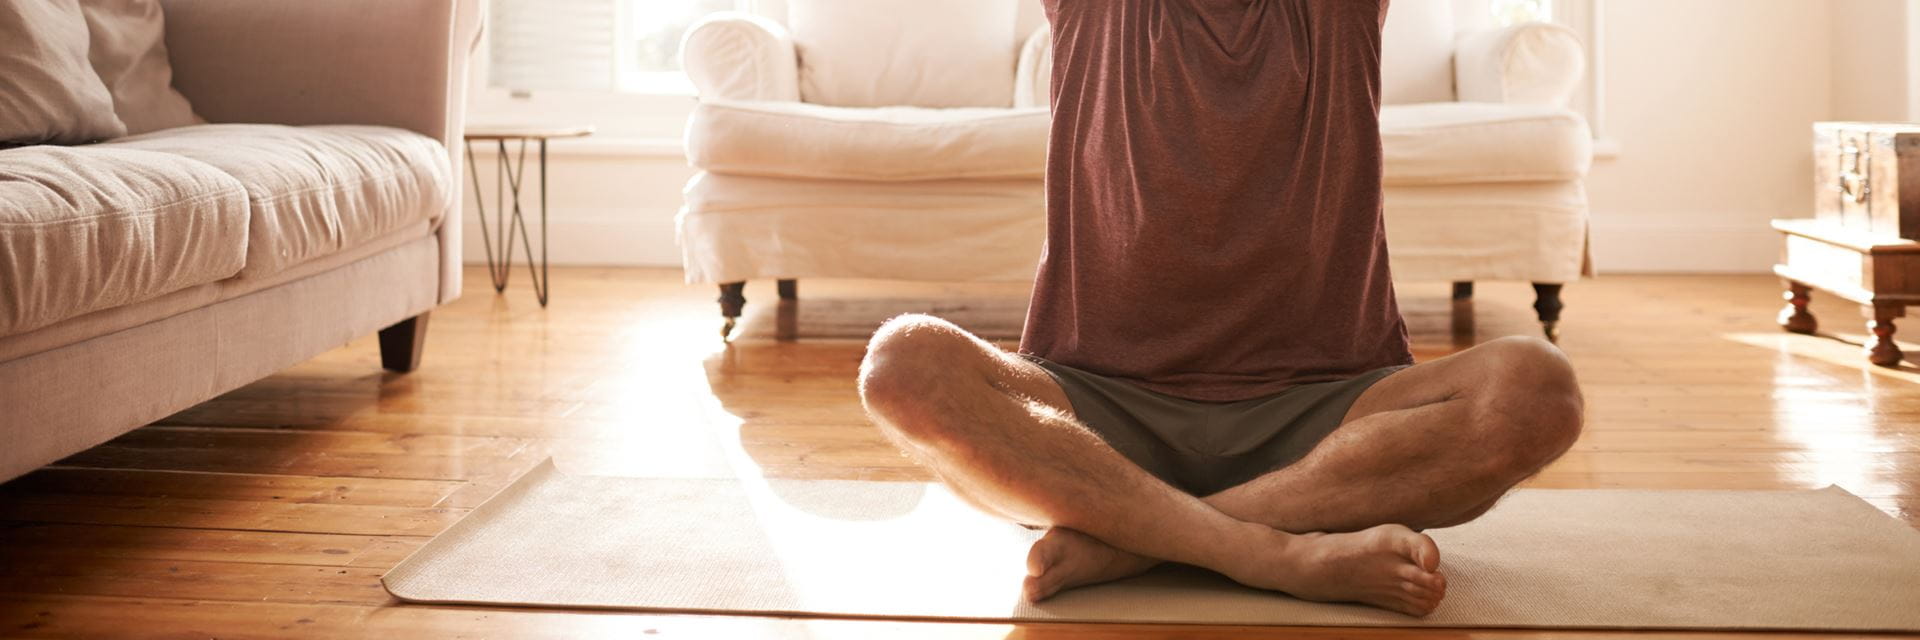 Drie simpele mindfulness oefeningen voor thuis